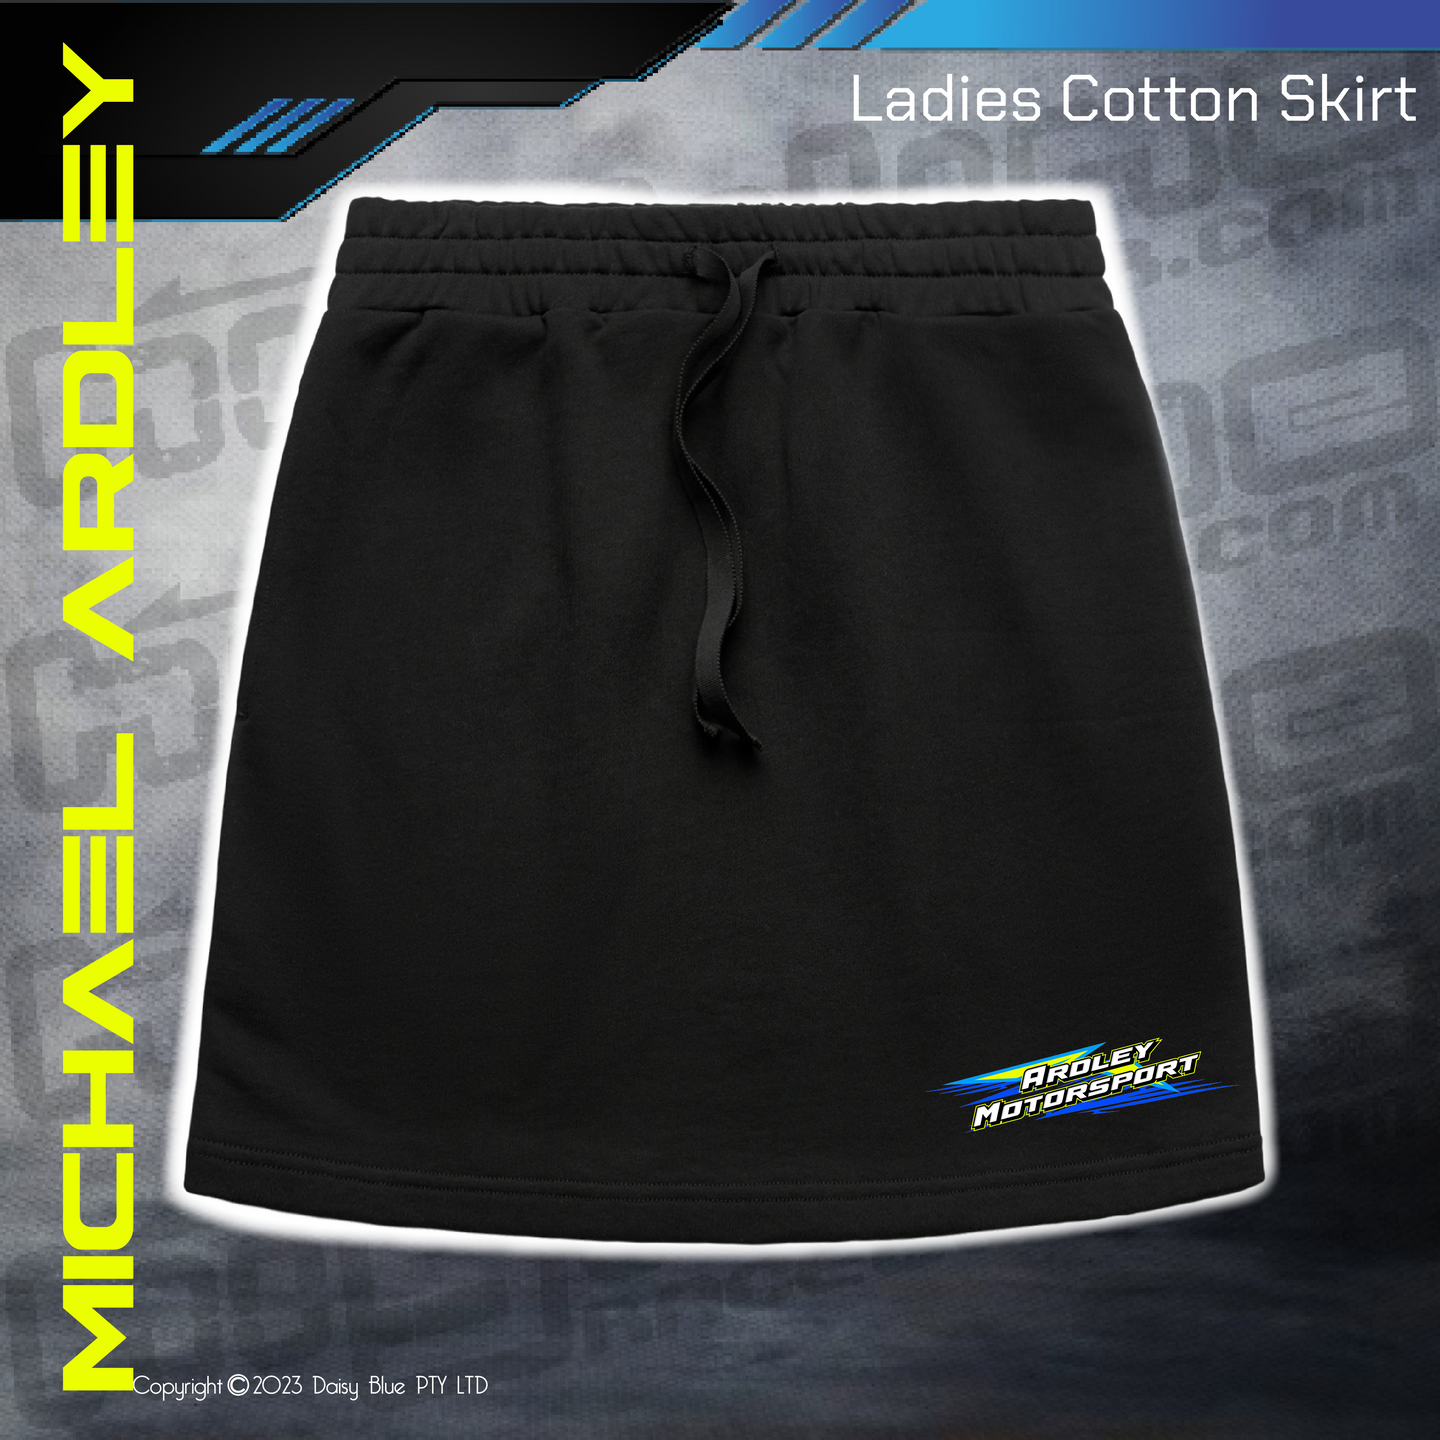 Cotton Skirt - Ardley Motorsport